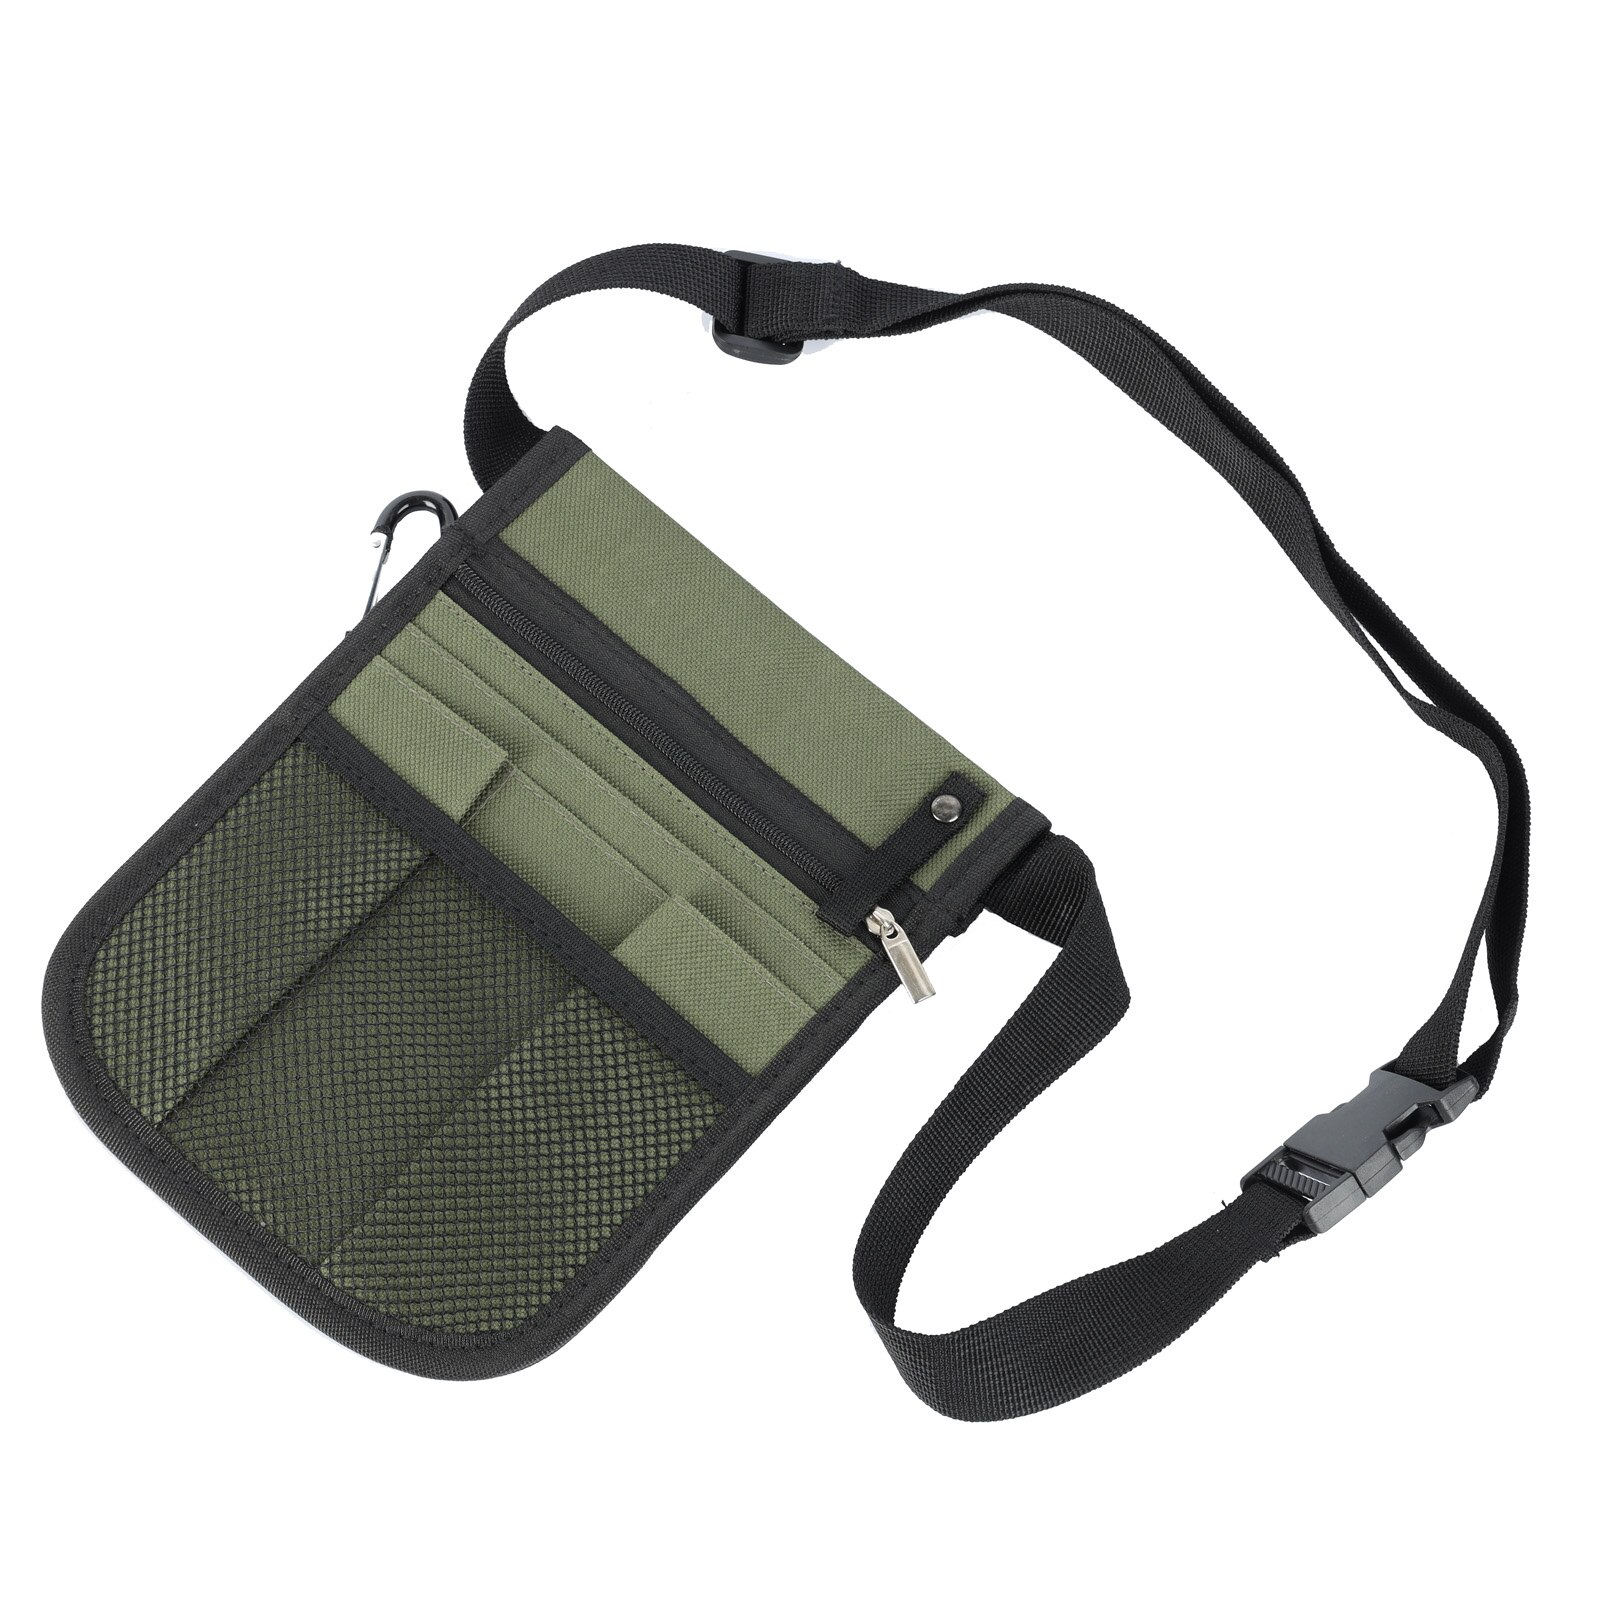 Nurse Nursing Belt Organizer Waist Bag Pouch for Nurse Accessories 2 Sided - 8 Pocket Organizer Utility Belt: Army green